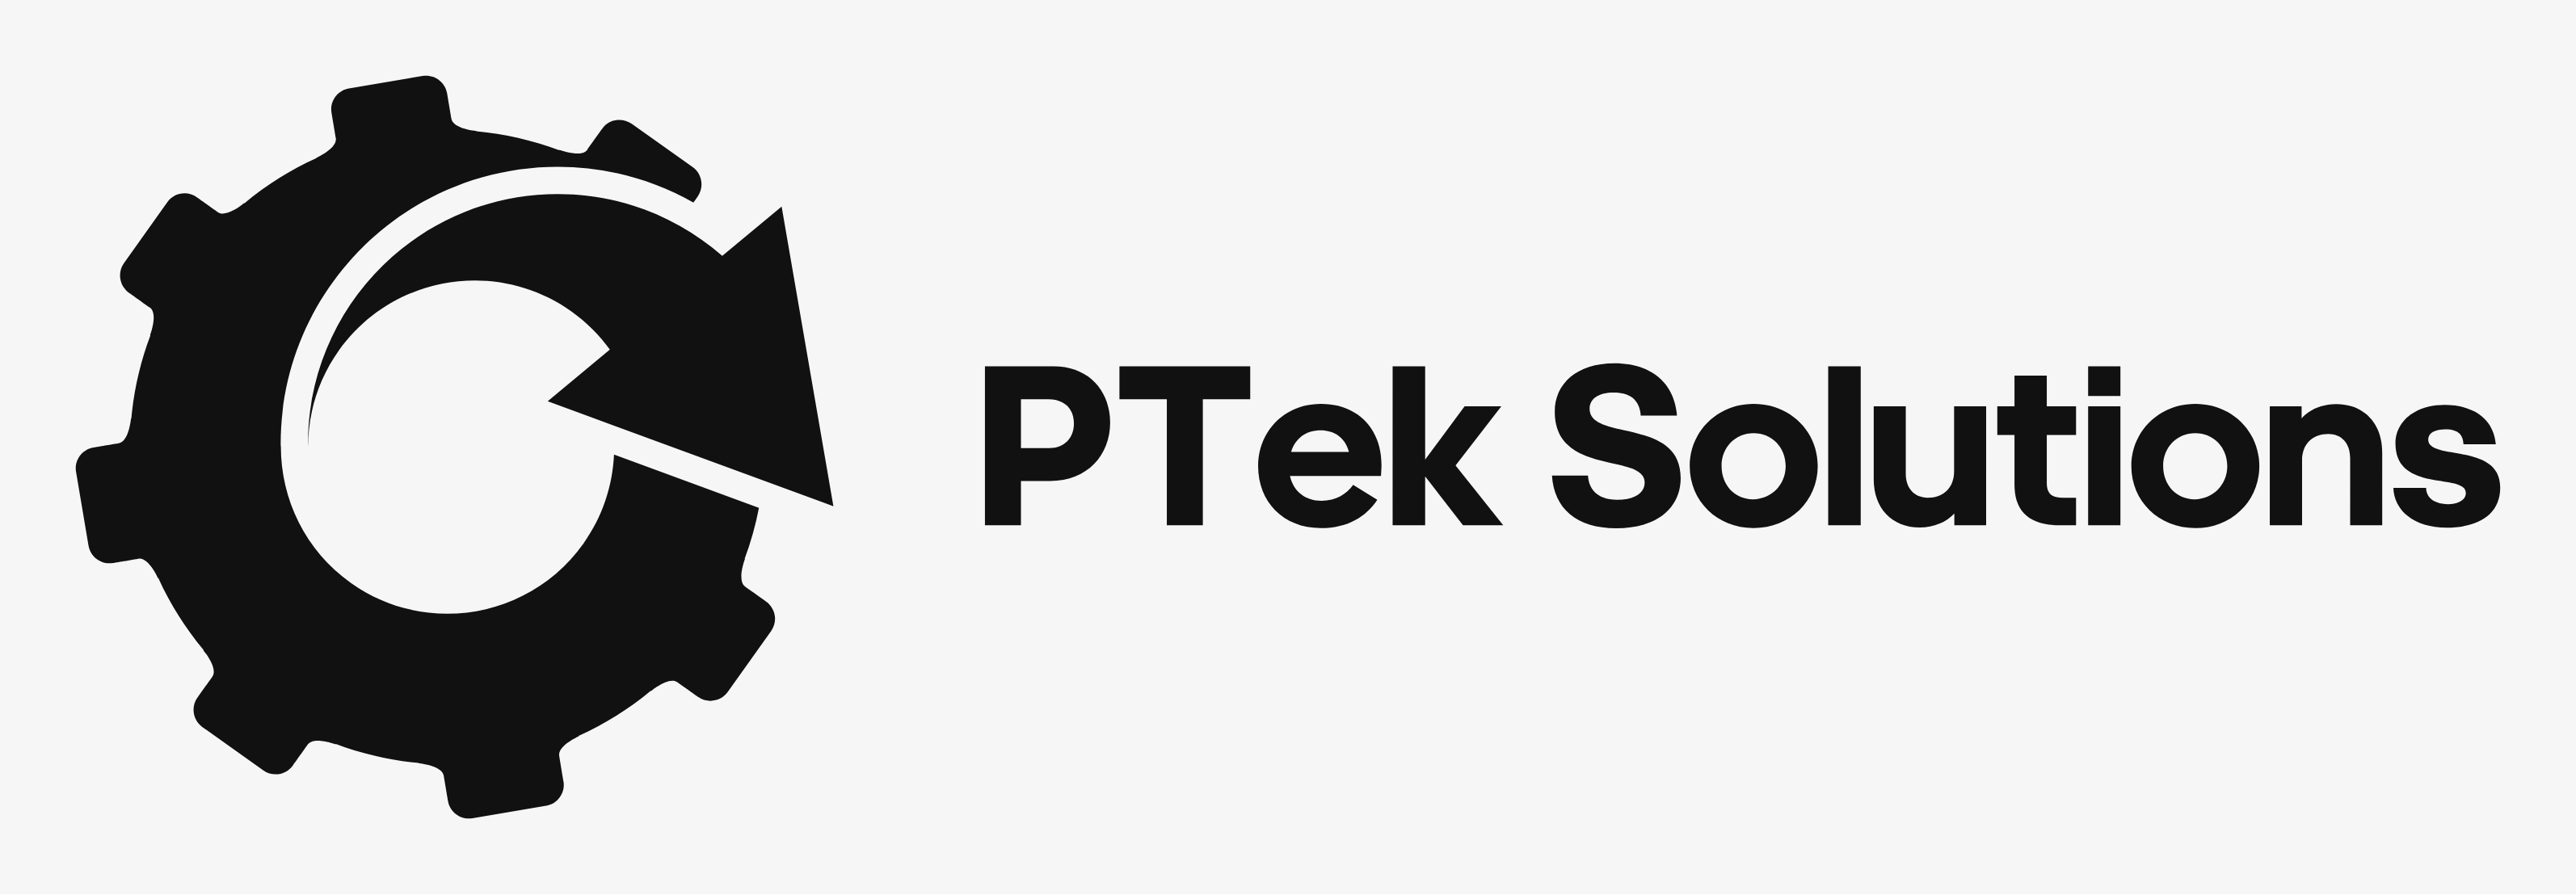 PTek Solutions